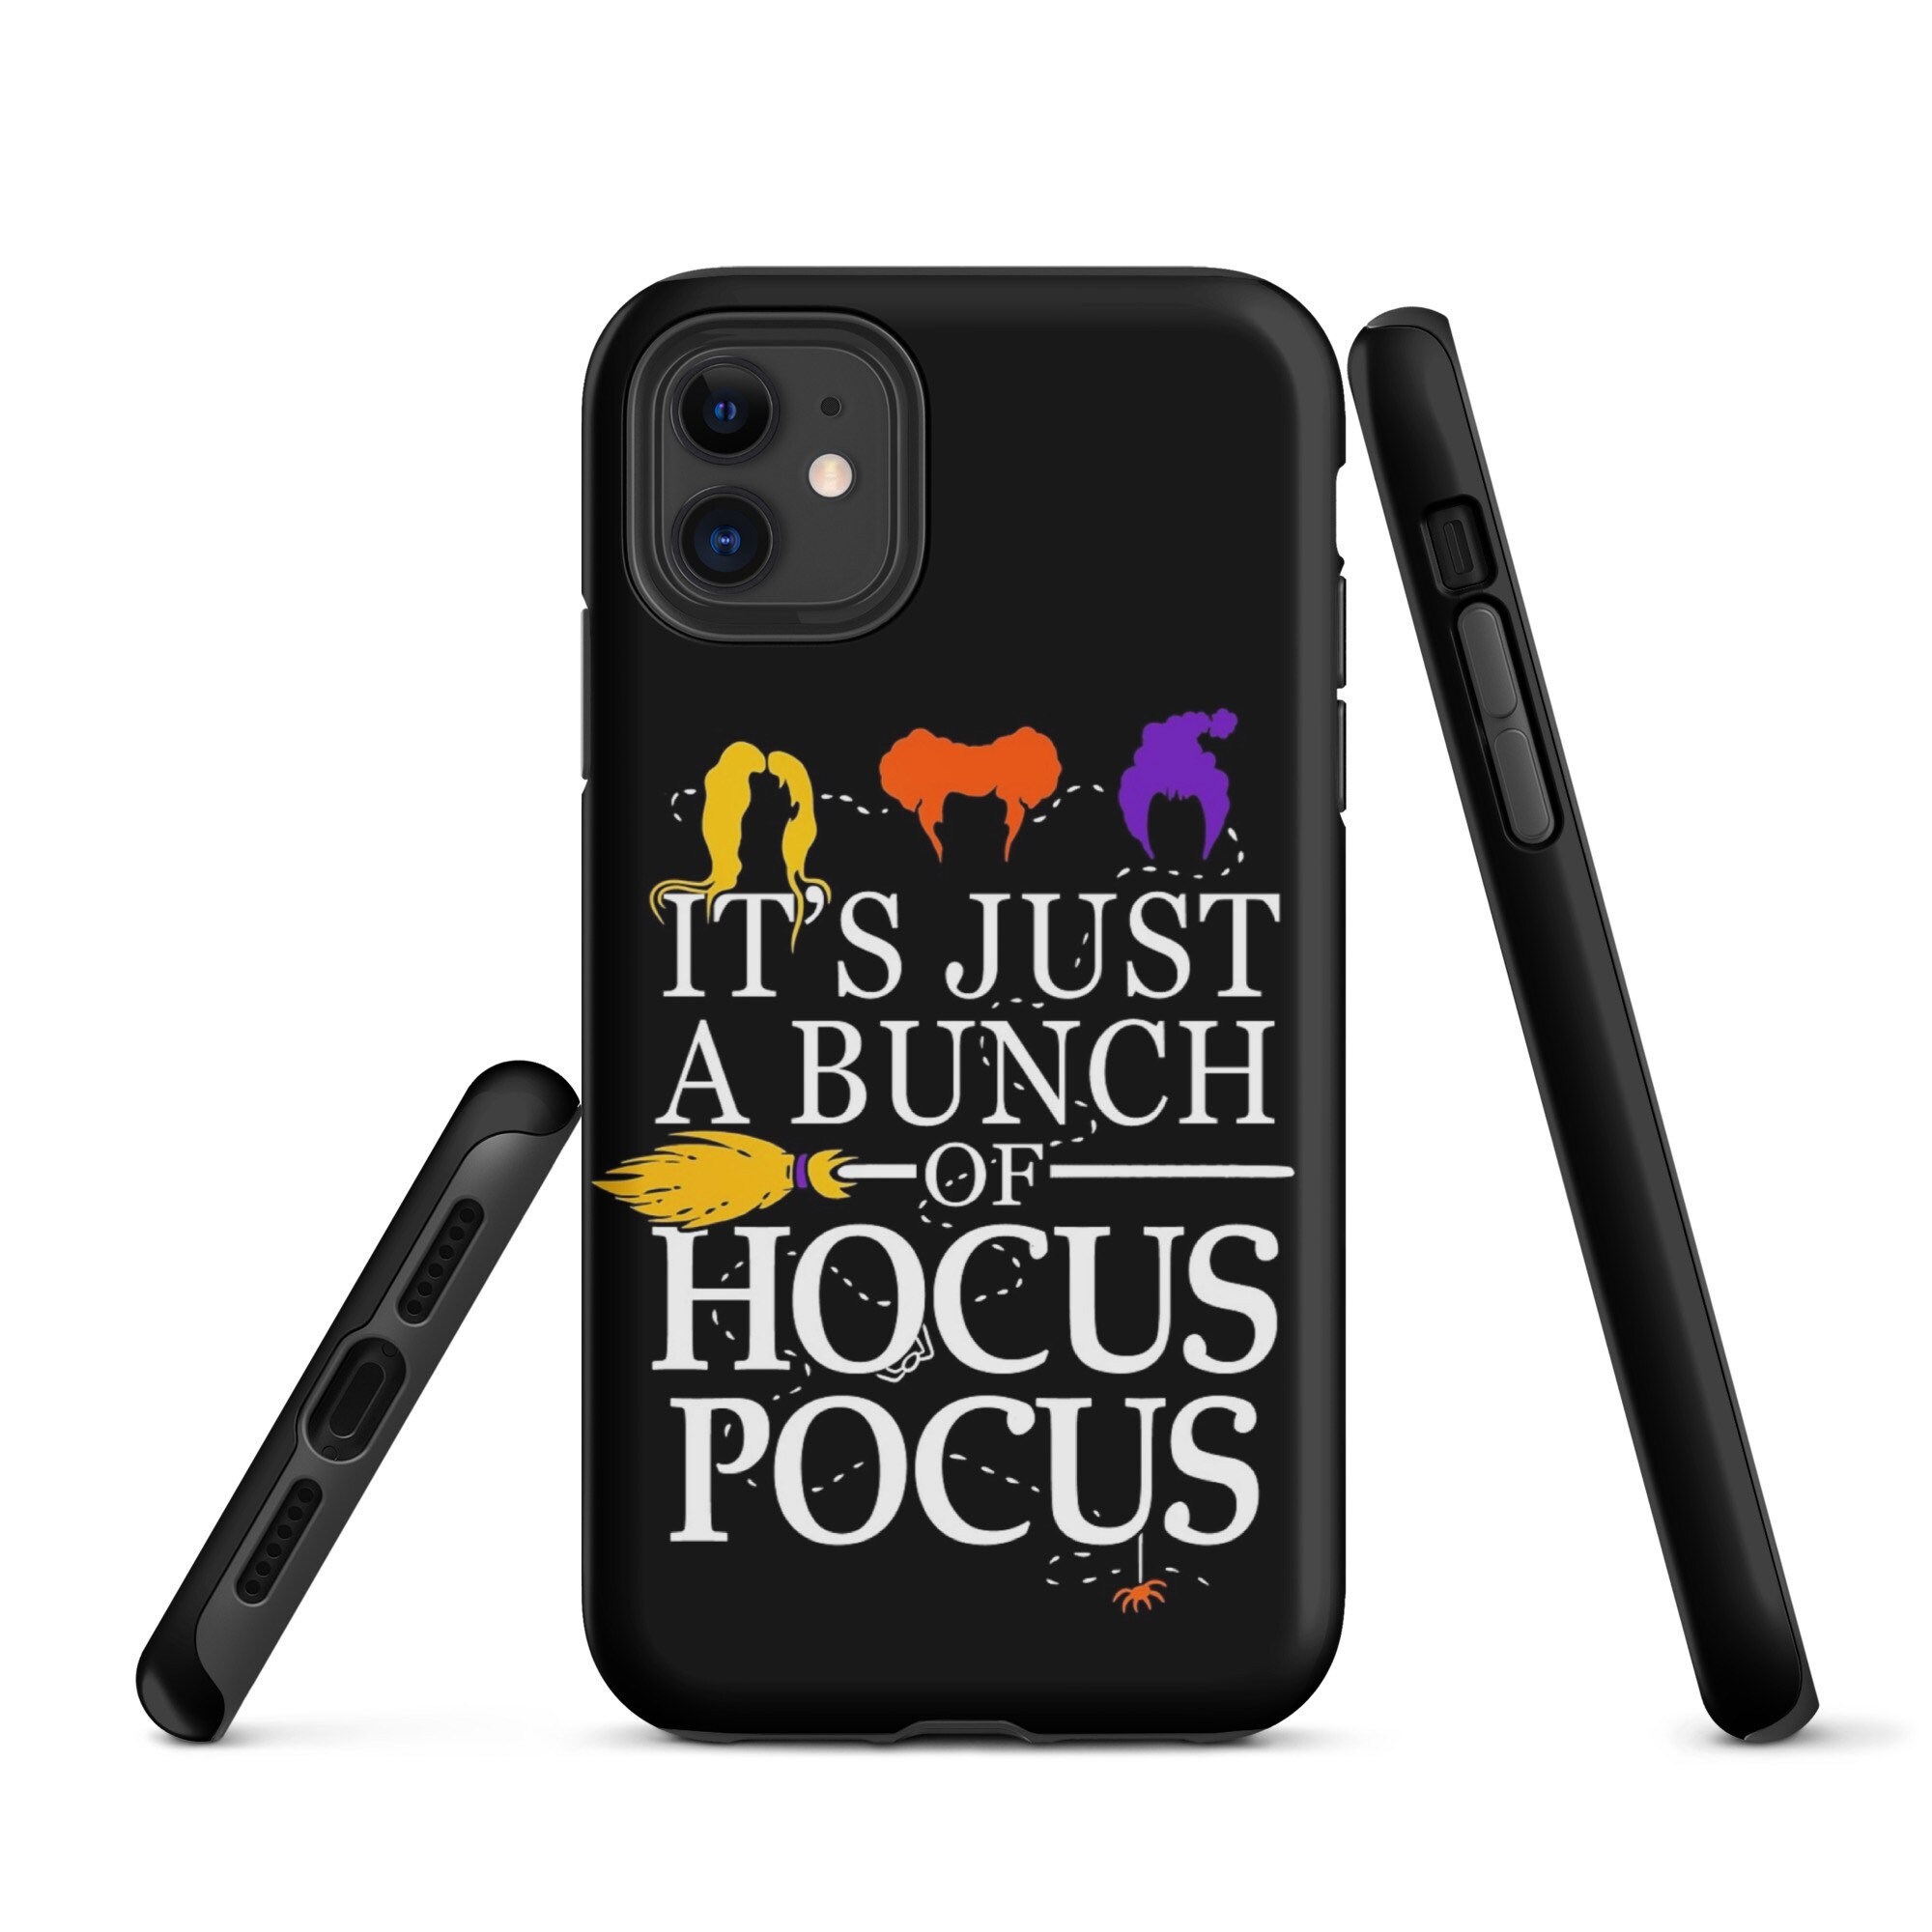 Discover Disney Halloween Hocus Pocus Tough iPhone case